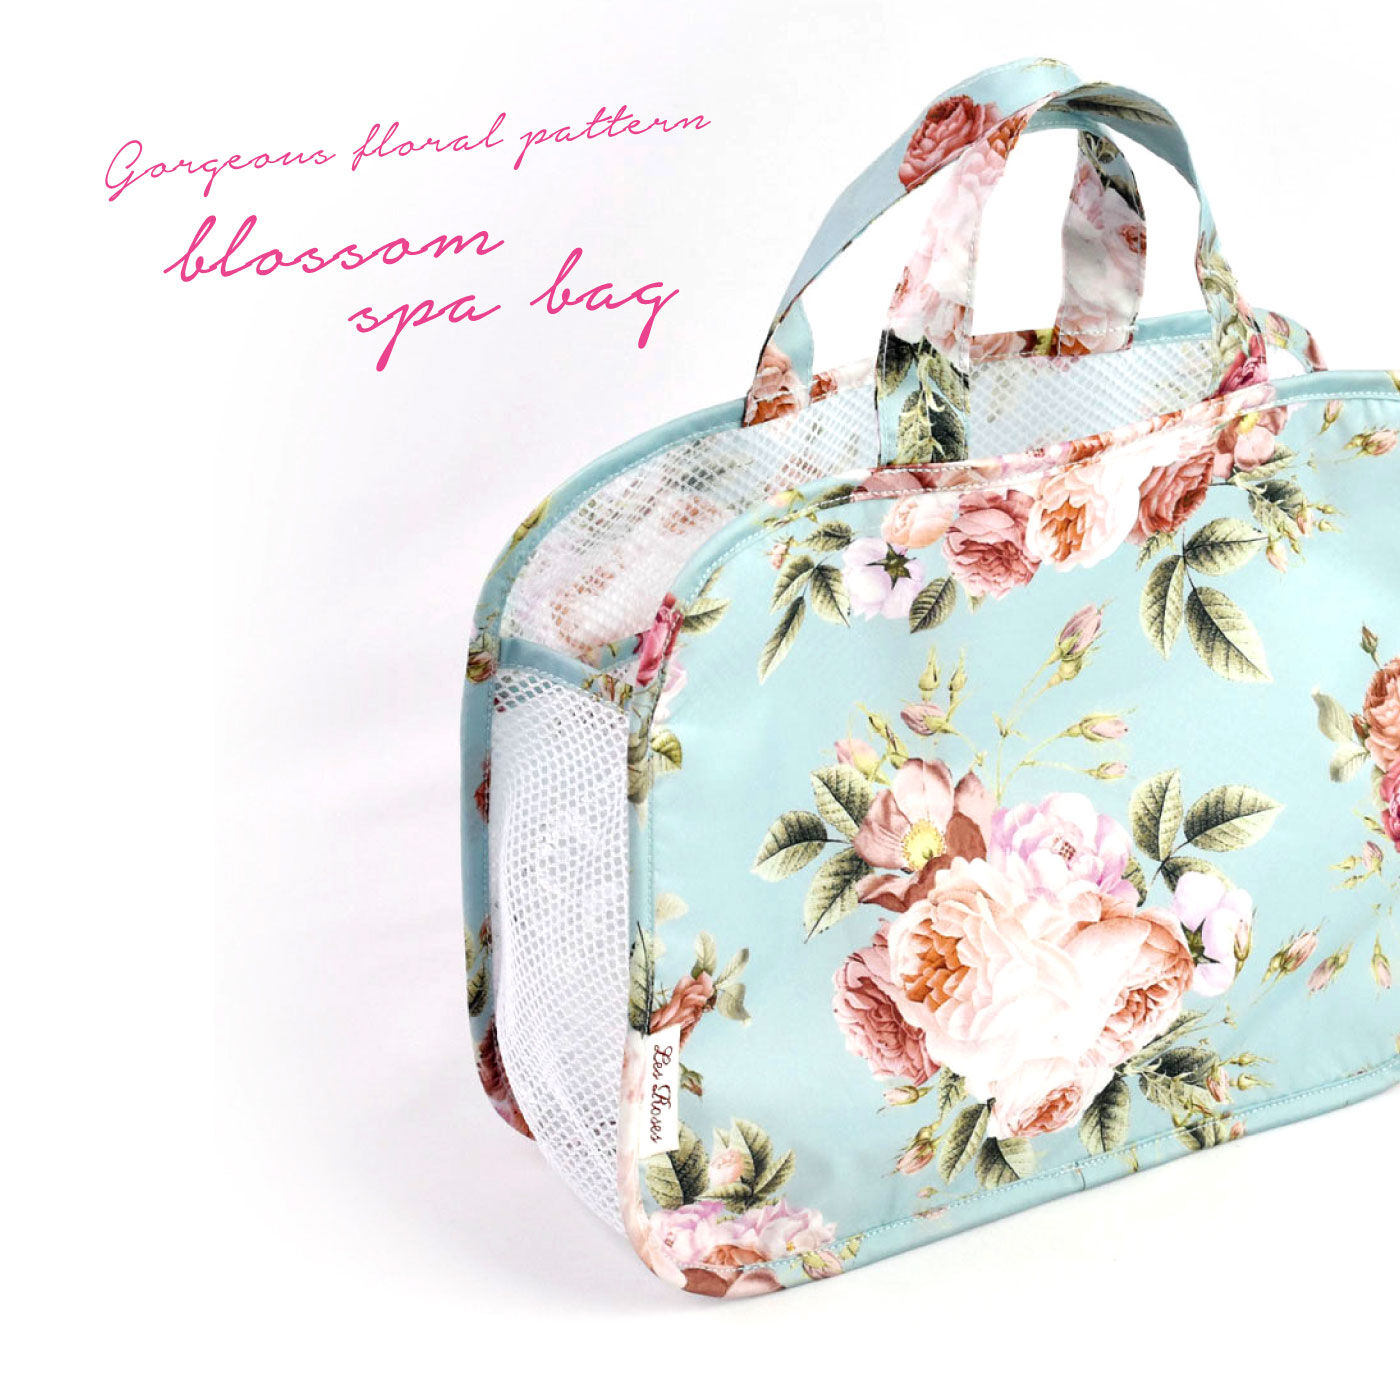 FELISSIMO PARTNERS|LA LUICE 豪華な花柄が素敵な　ルドゥーテ ブロッサムスパバッグ